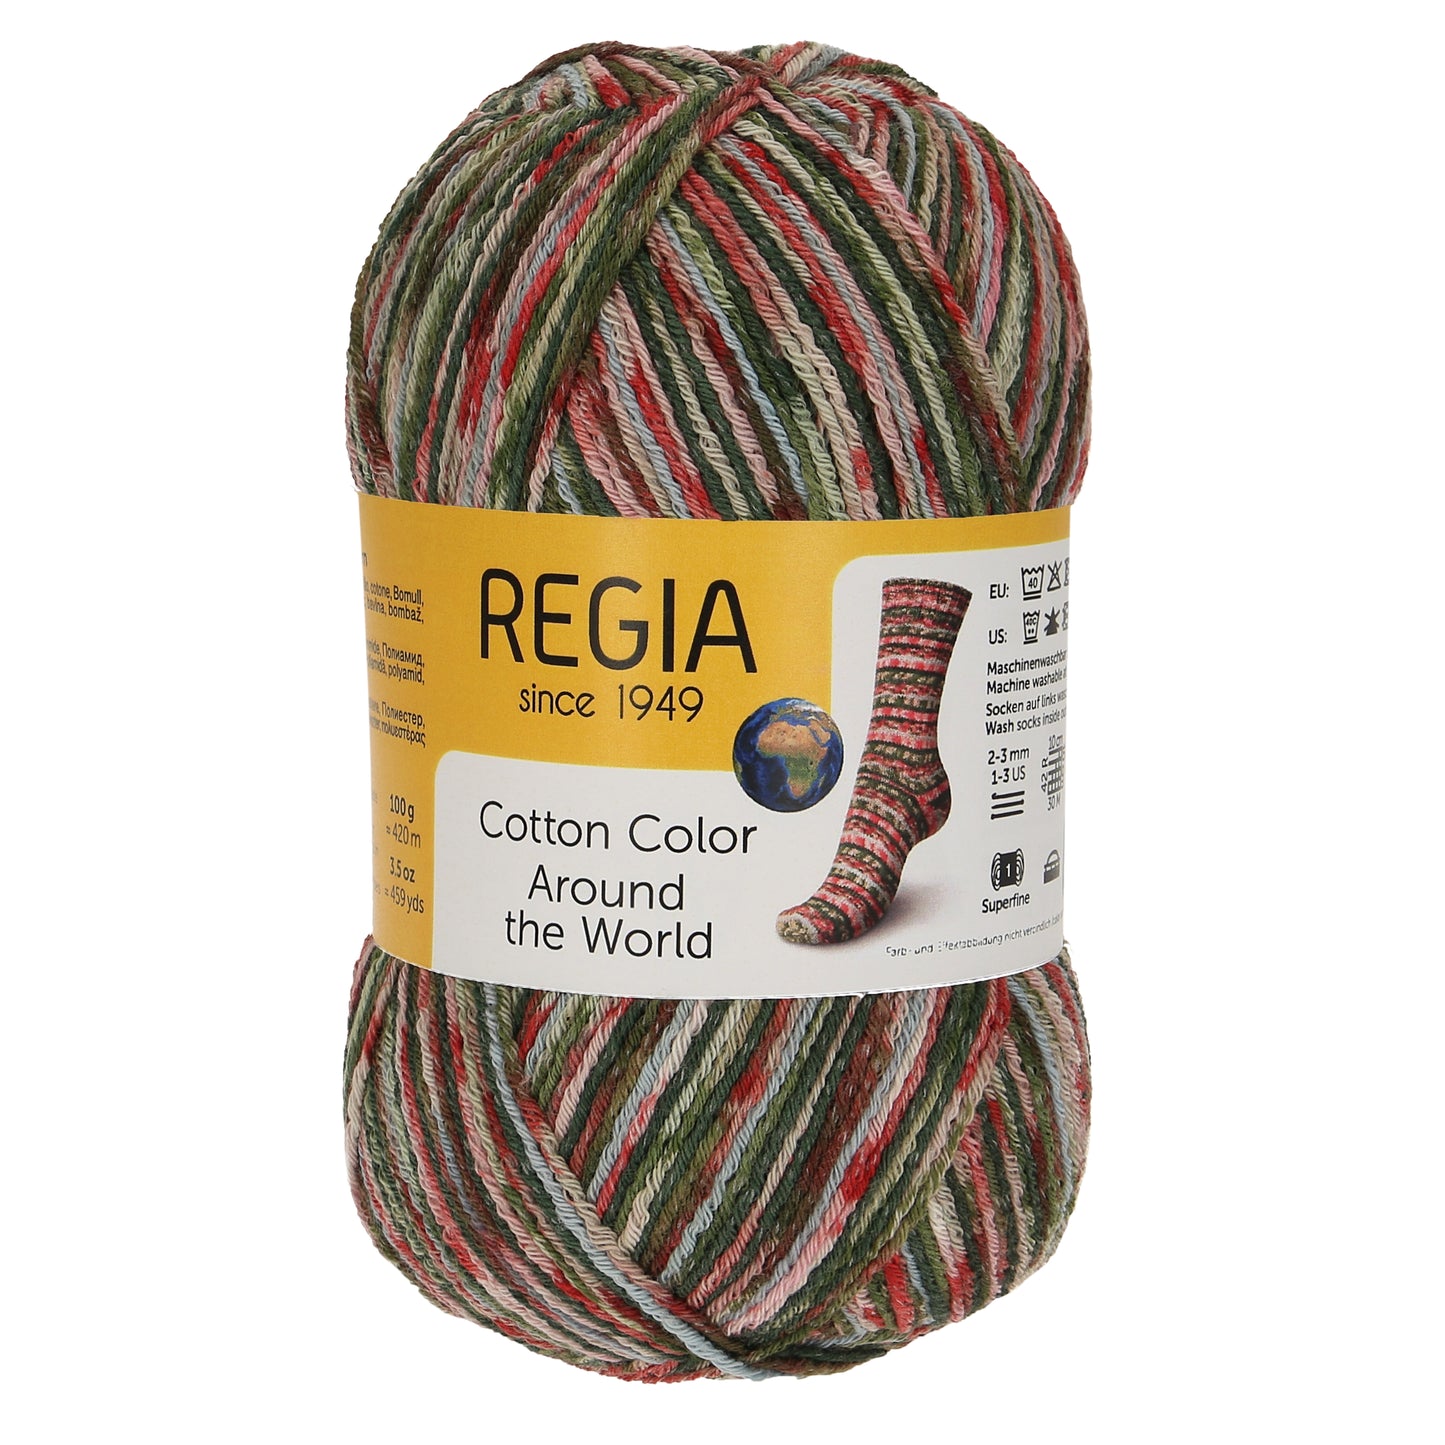 Regia Cotton Color Around the World Black Forest 02413